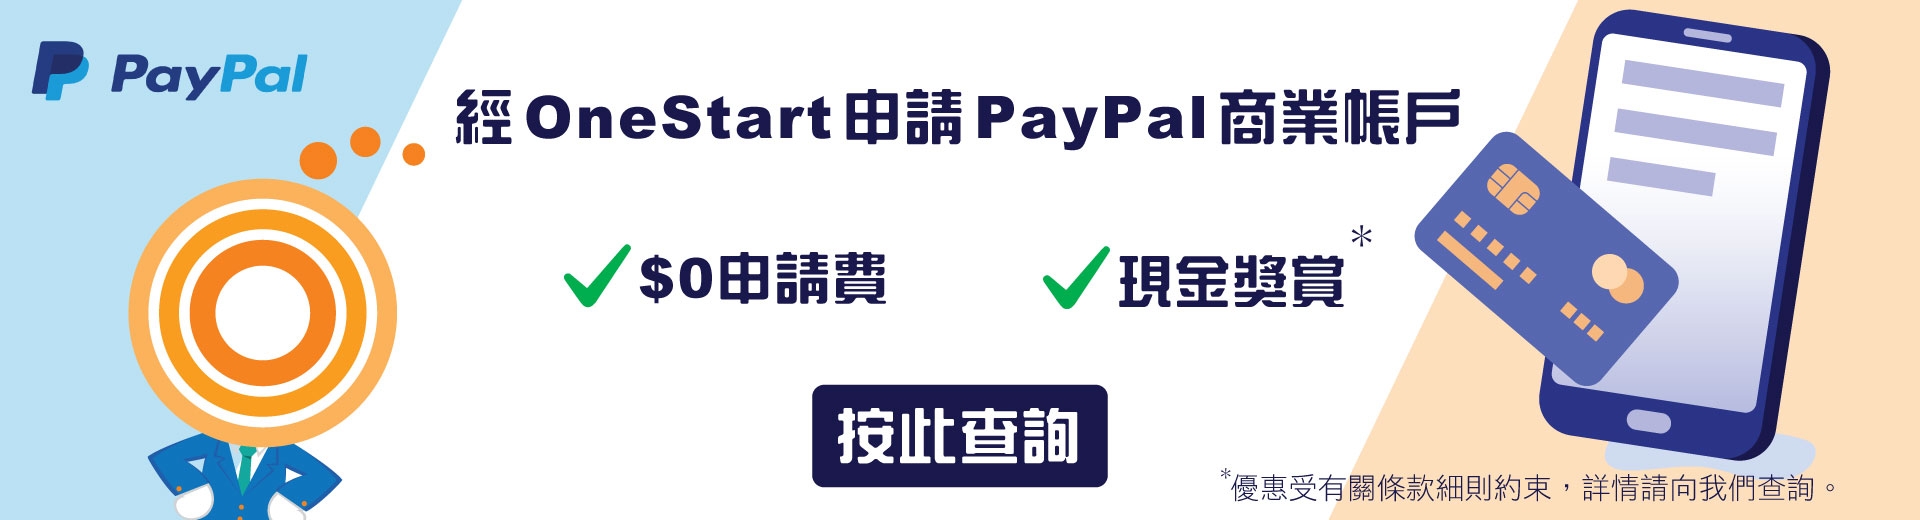 OneStart 客戶尊享 PayPal 開戶現金獎賞